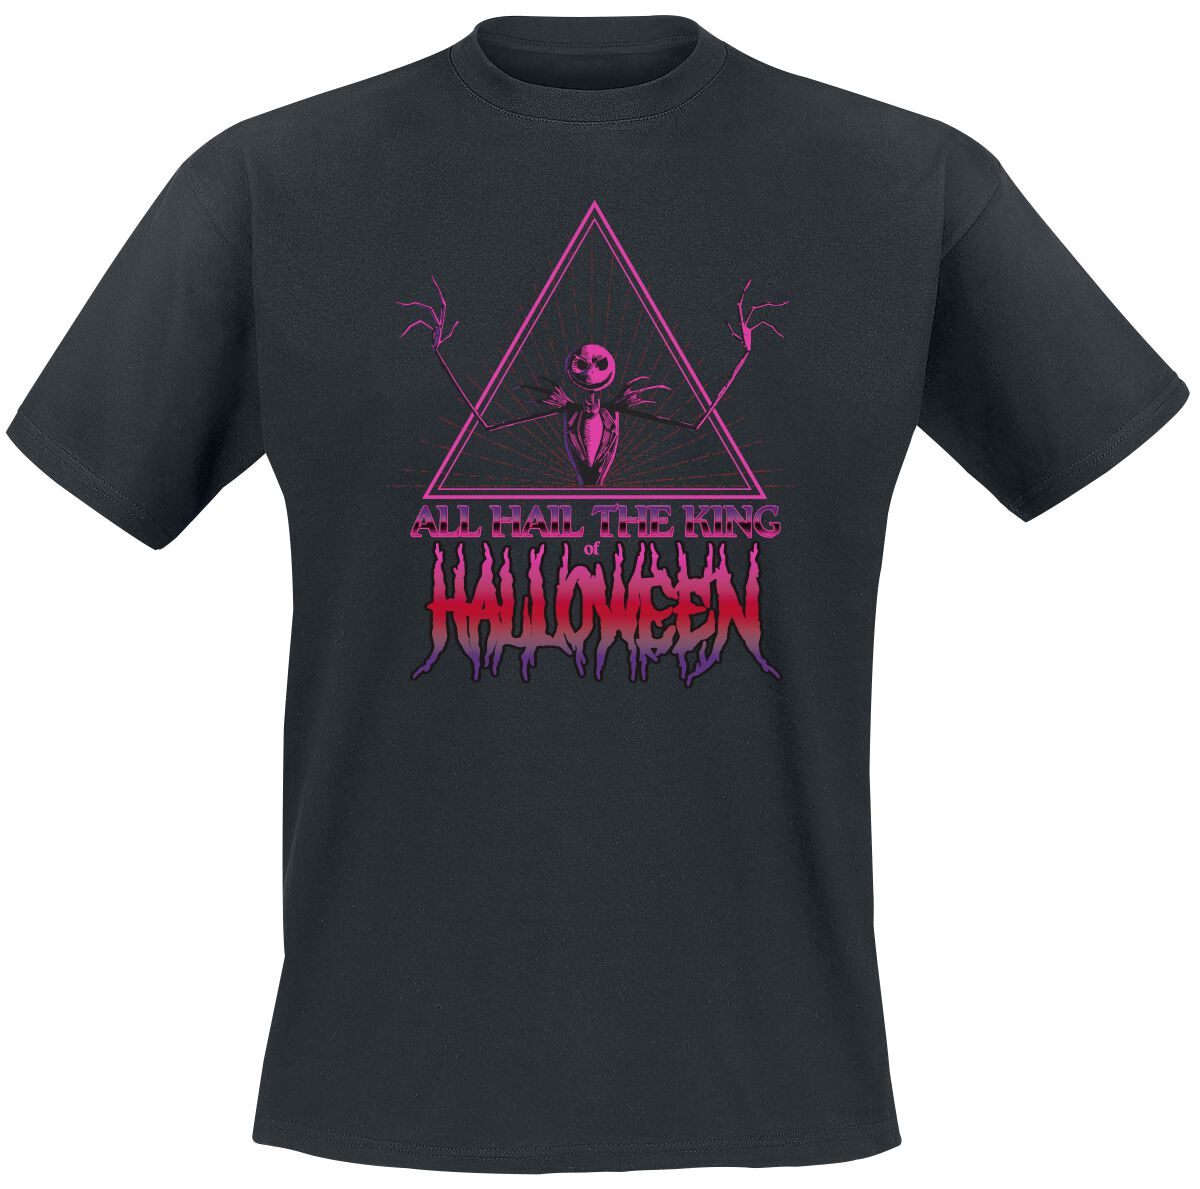 The Nightmare Before Christmas Halloween King T-Shirt schwarz in XXL